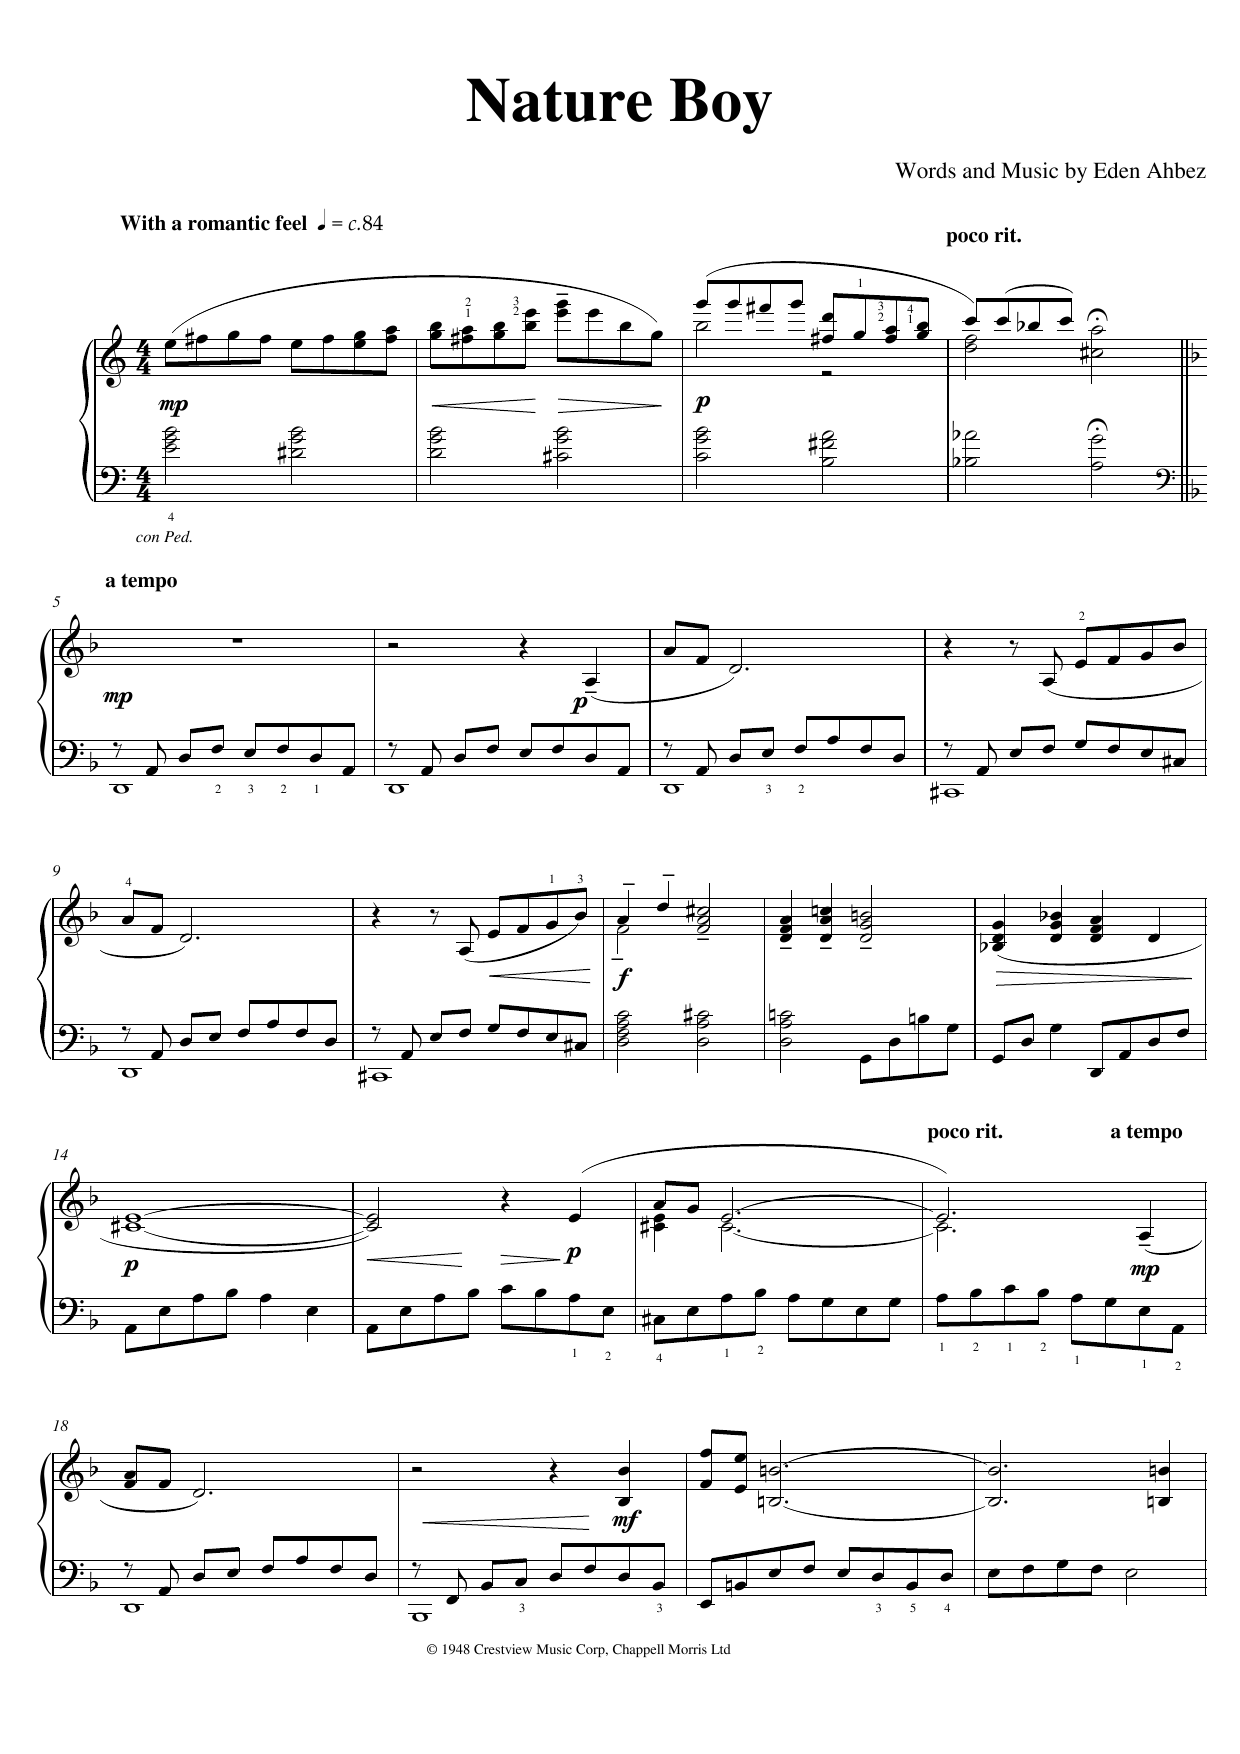 David Bowie "Nature Boy" Sheet Music PDF Notes, Chords | Jazz Score Piano Solo Download Printable. SKU: